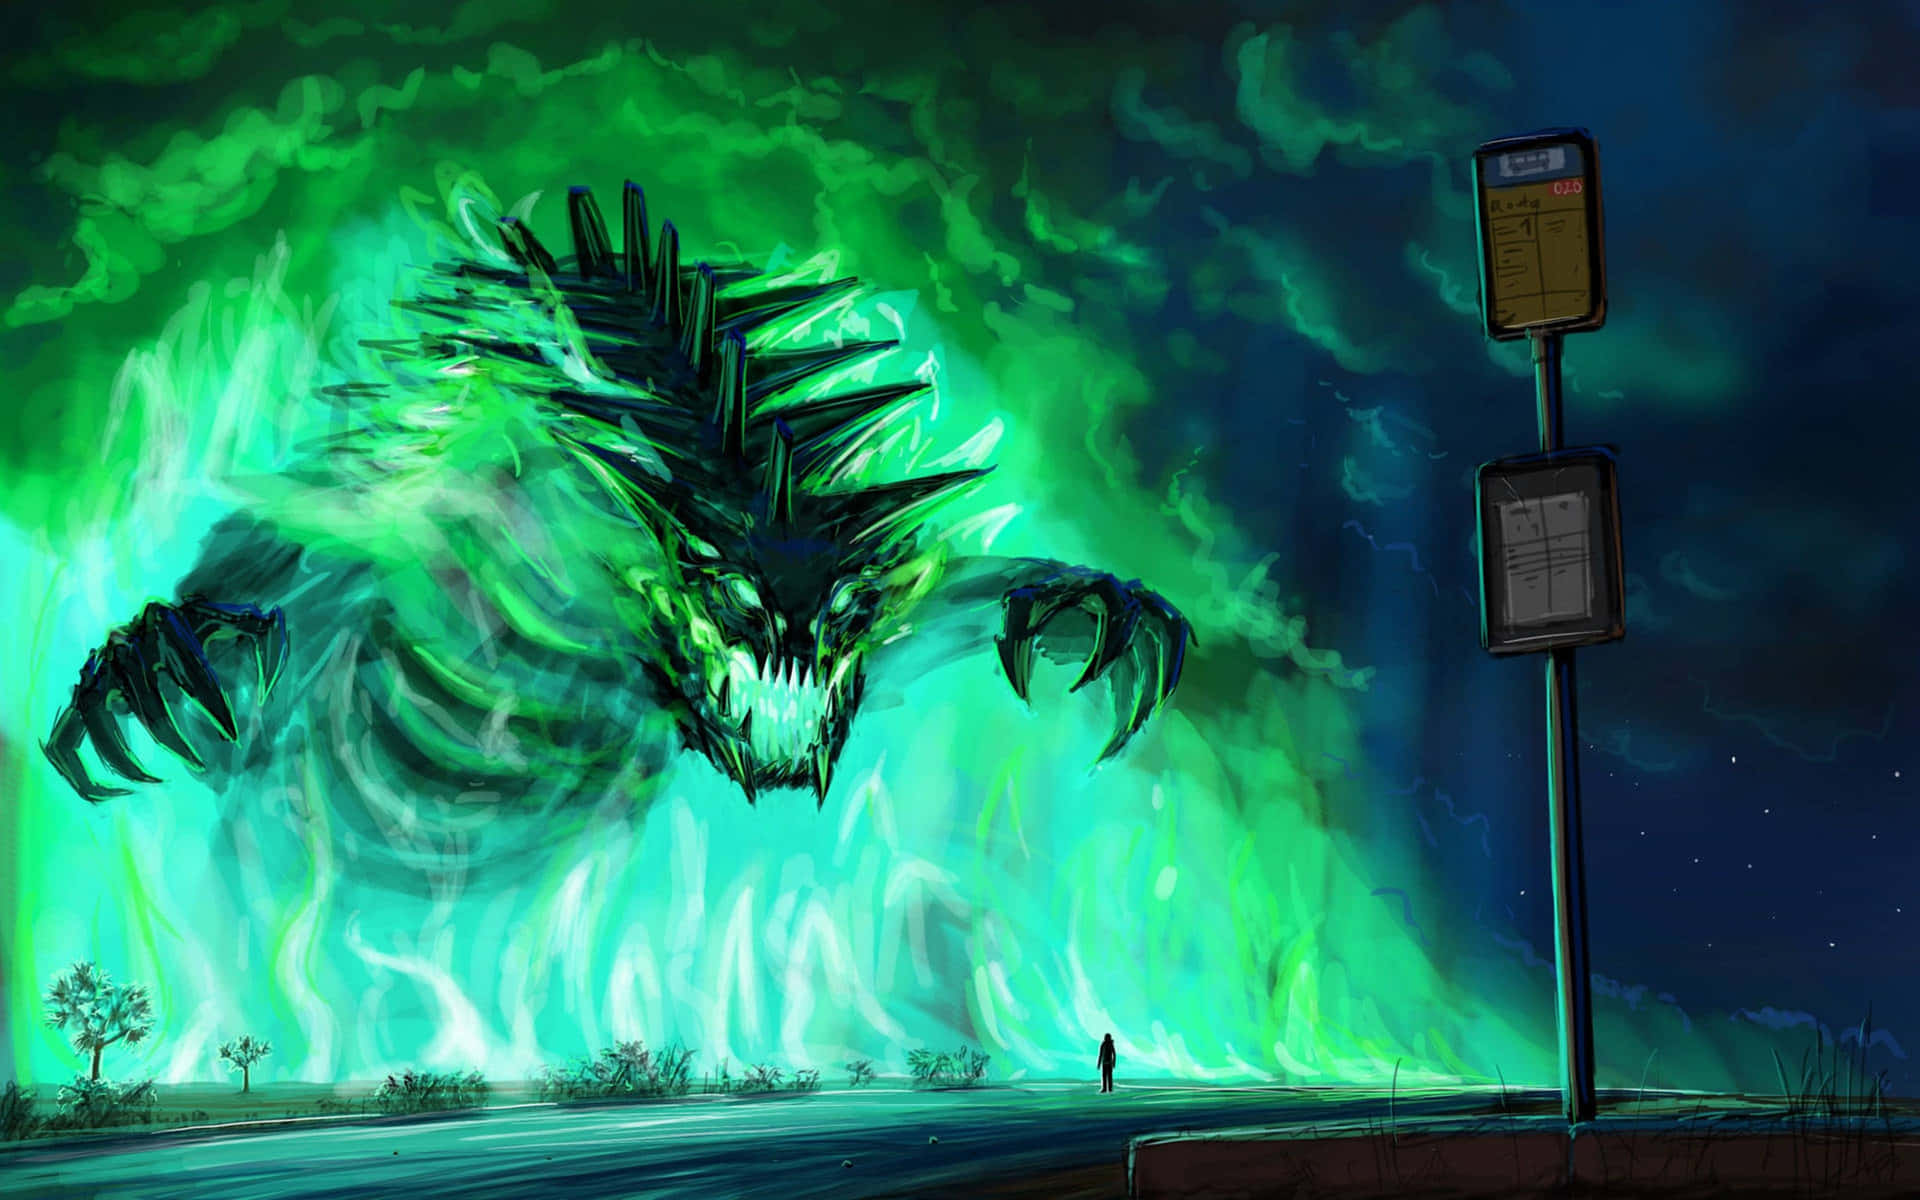 4K Ultra HD Fantasi Monster Scene - 4K ultra HD fantasi monster scene. Wallpaper